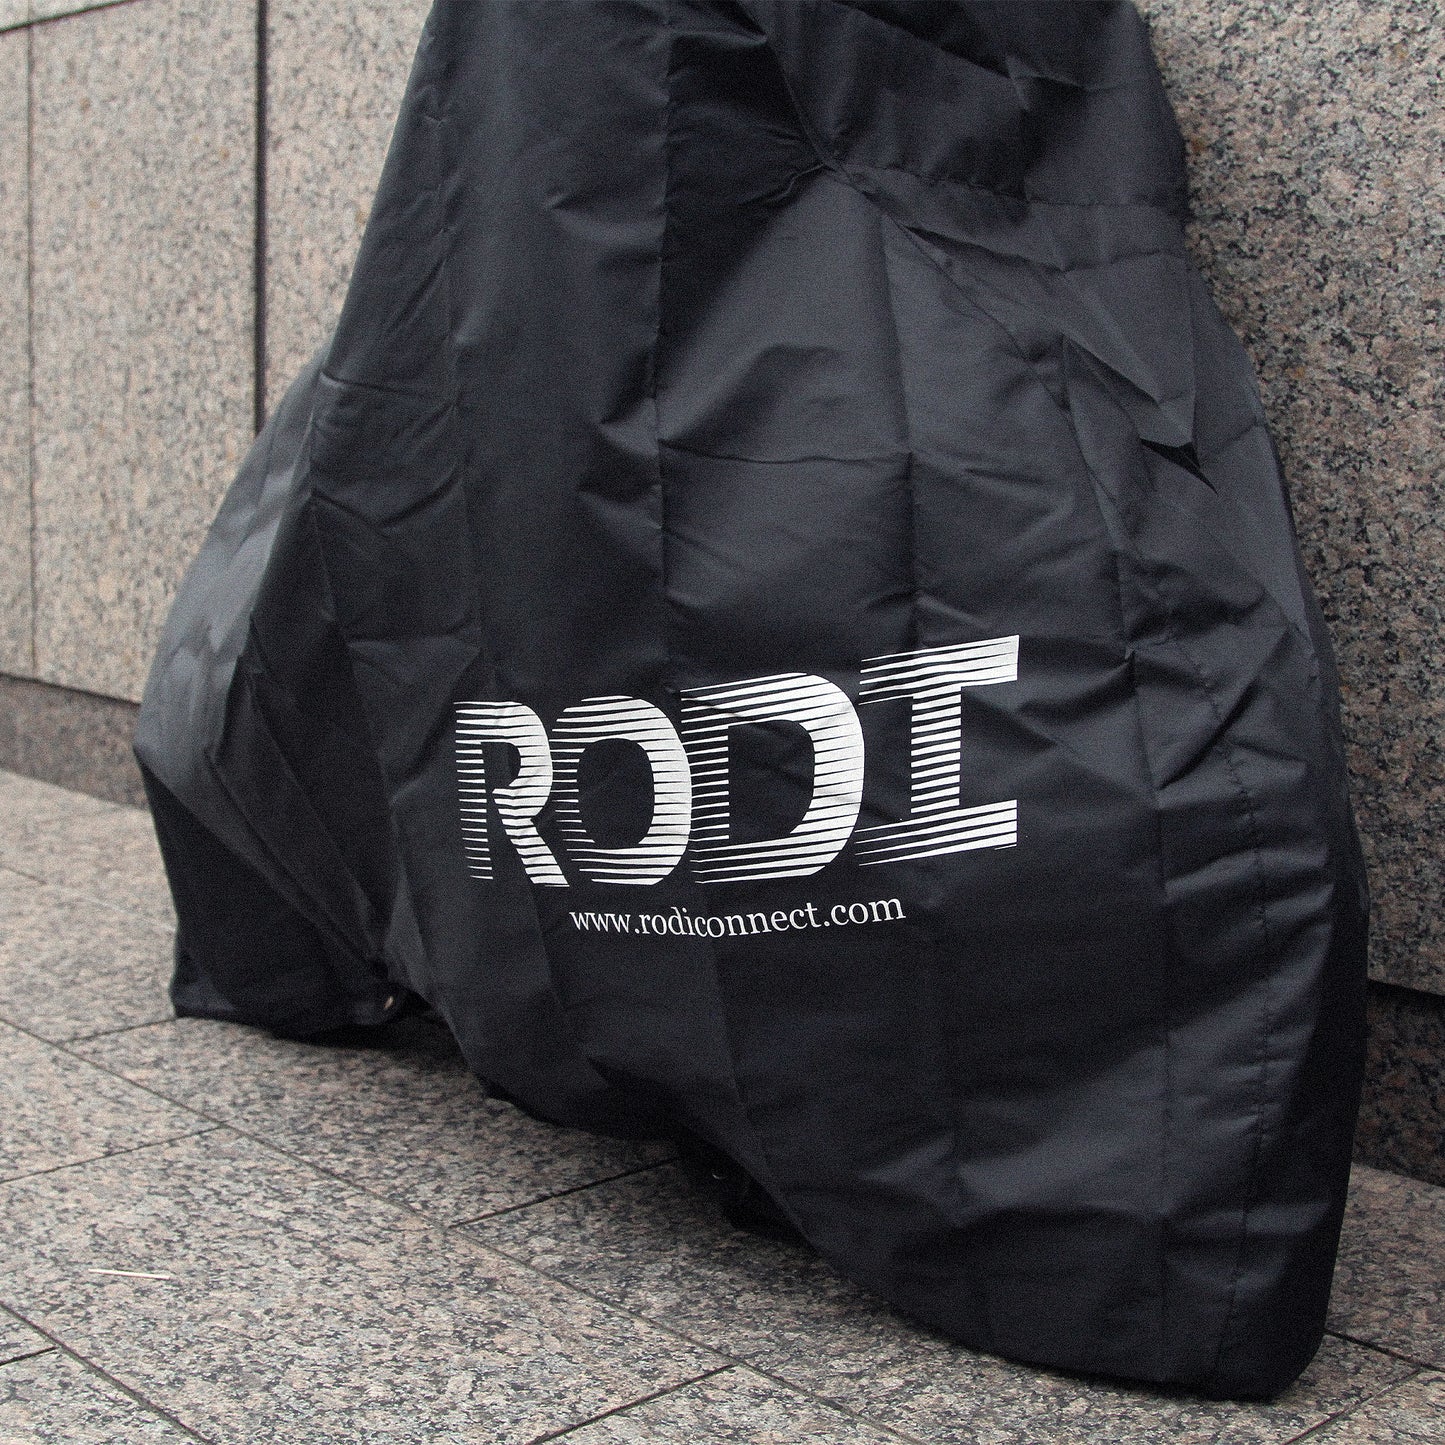 RODI - OG Bike Cover/Black